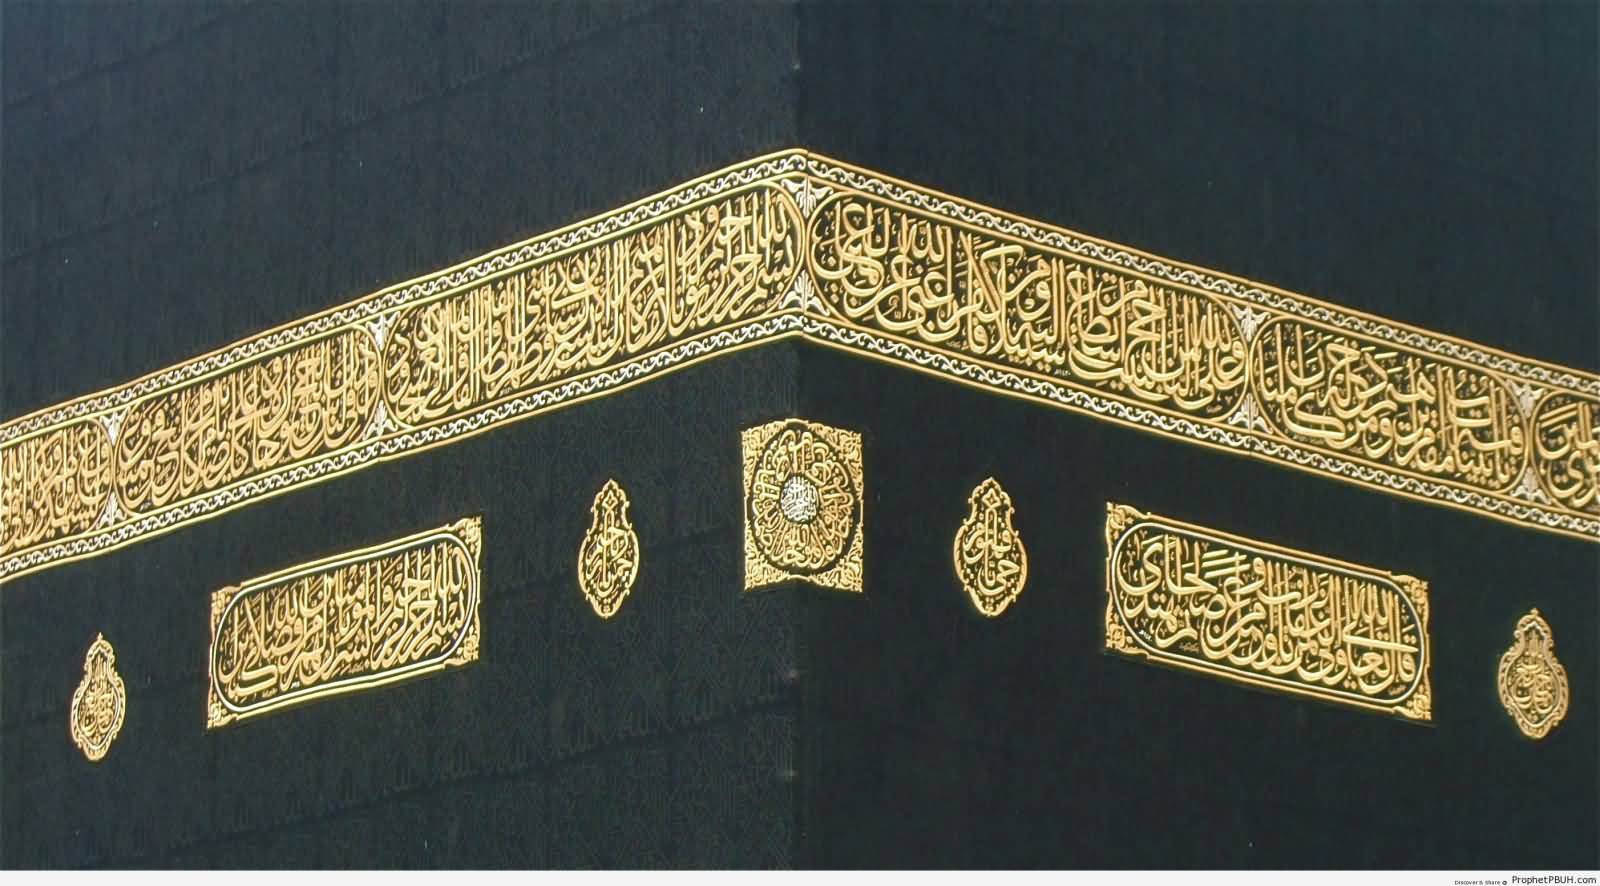 Kaaba Corner Closeup At Masjid al-Haram In Mecca, Saudi Arabia